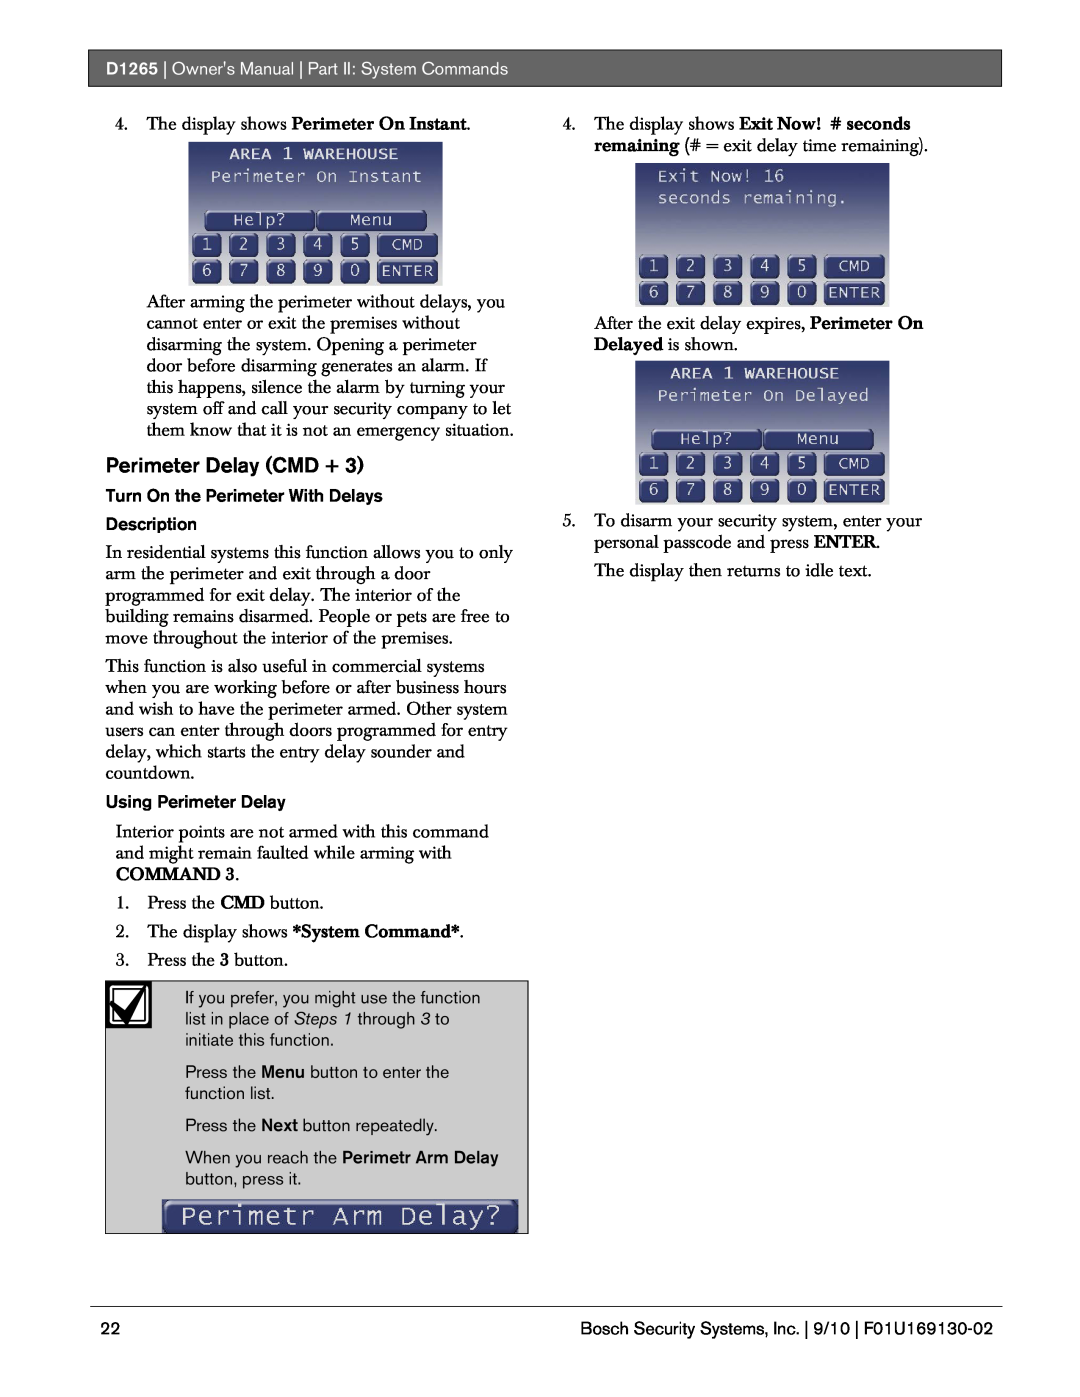 Bosch Appliances Perimeter Delay CMD +, D1265 | Owners Manual | Part II: System Commands, Using Perimeter Delay 